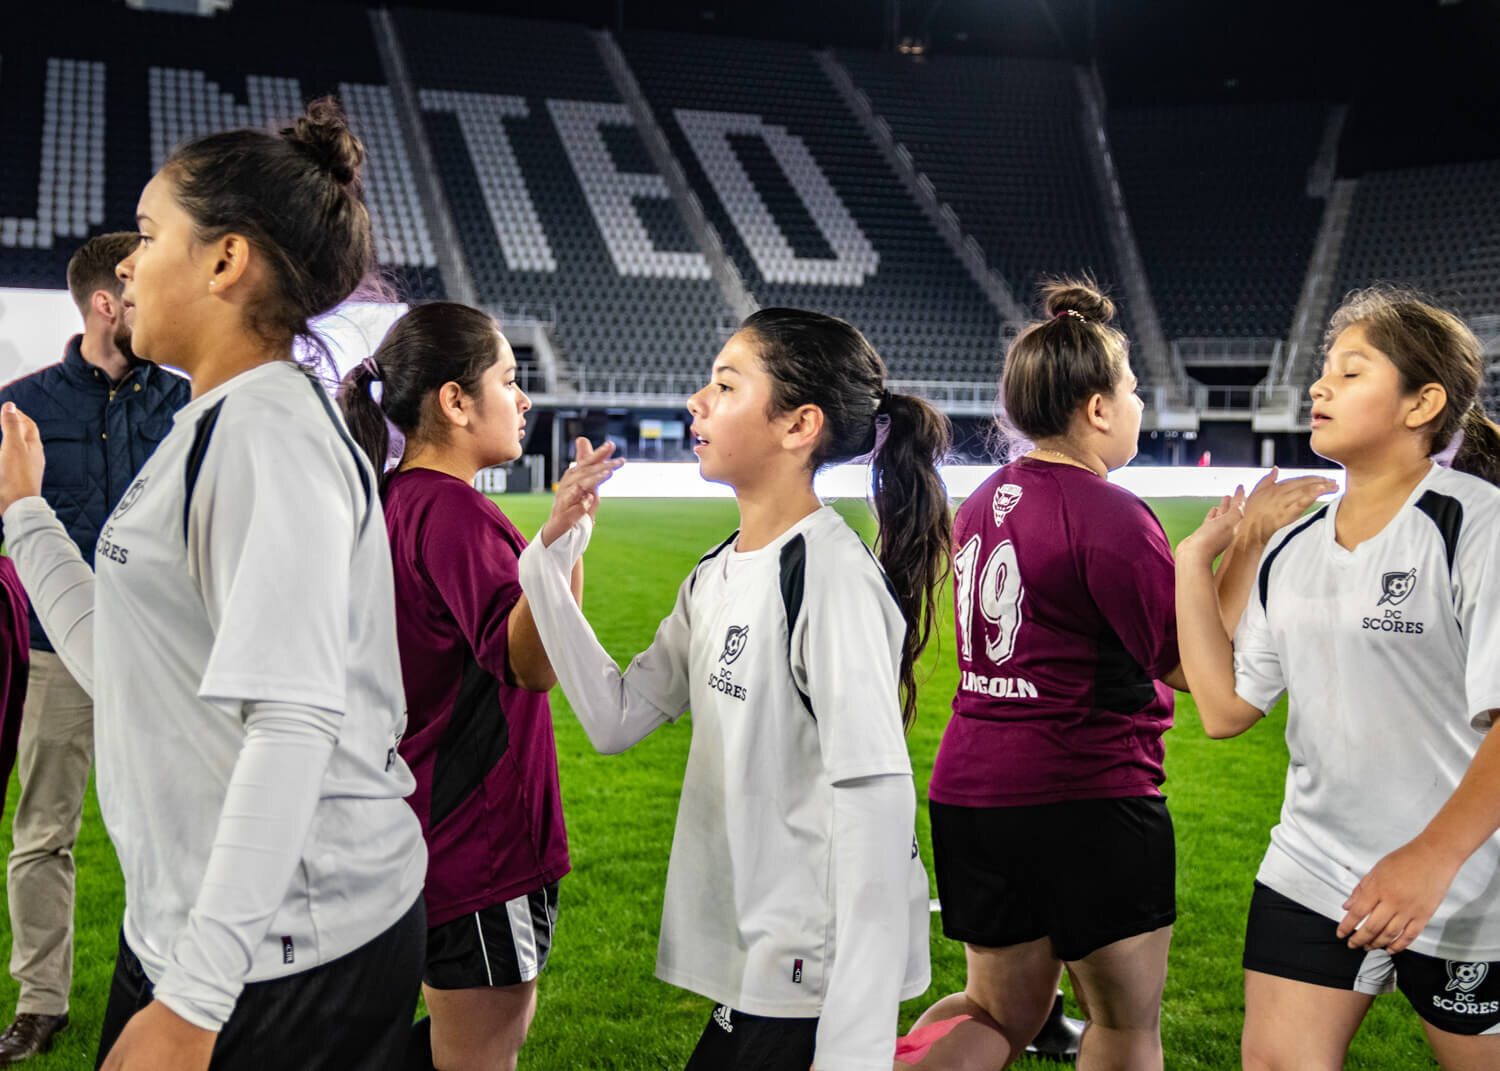 DC-Scores-Capital-Cup-2019-Youth-Soccer-Audi-Field-Washington-DC-United--crvnka-Photography-2.JPG